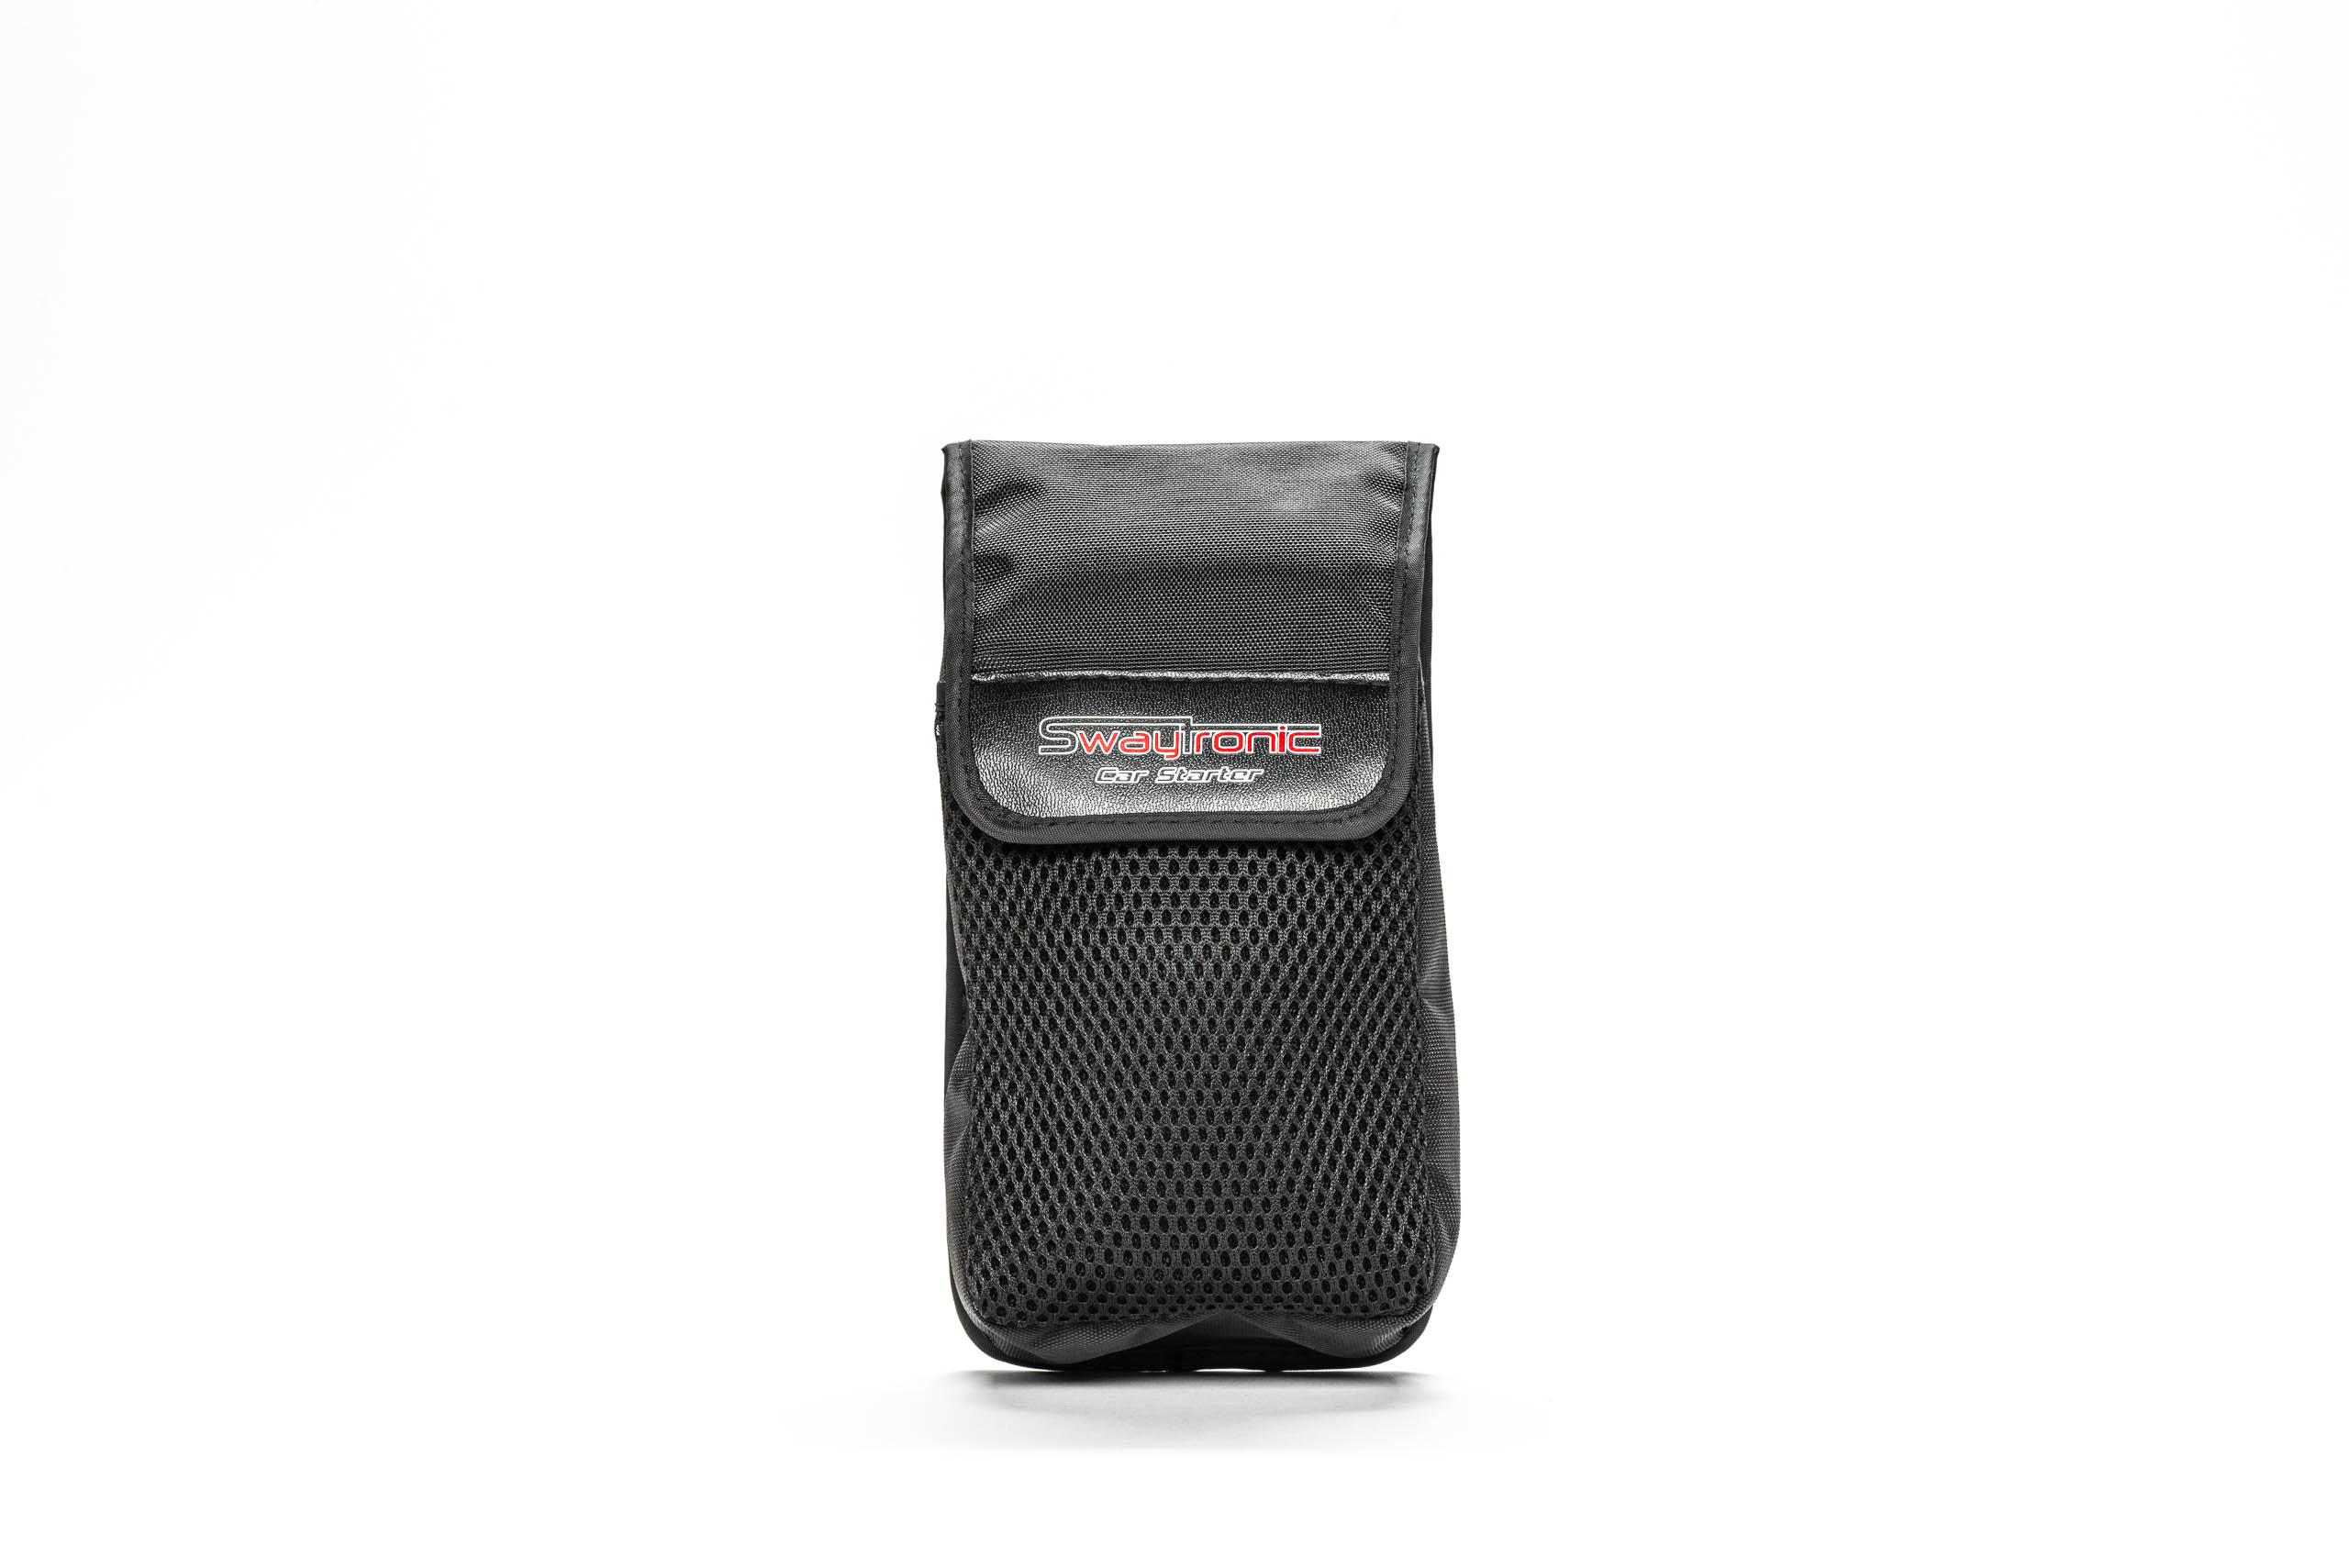 SWAYTRONIC Car Starter Product - Bag